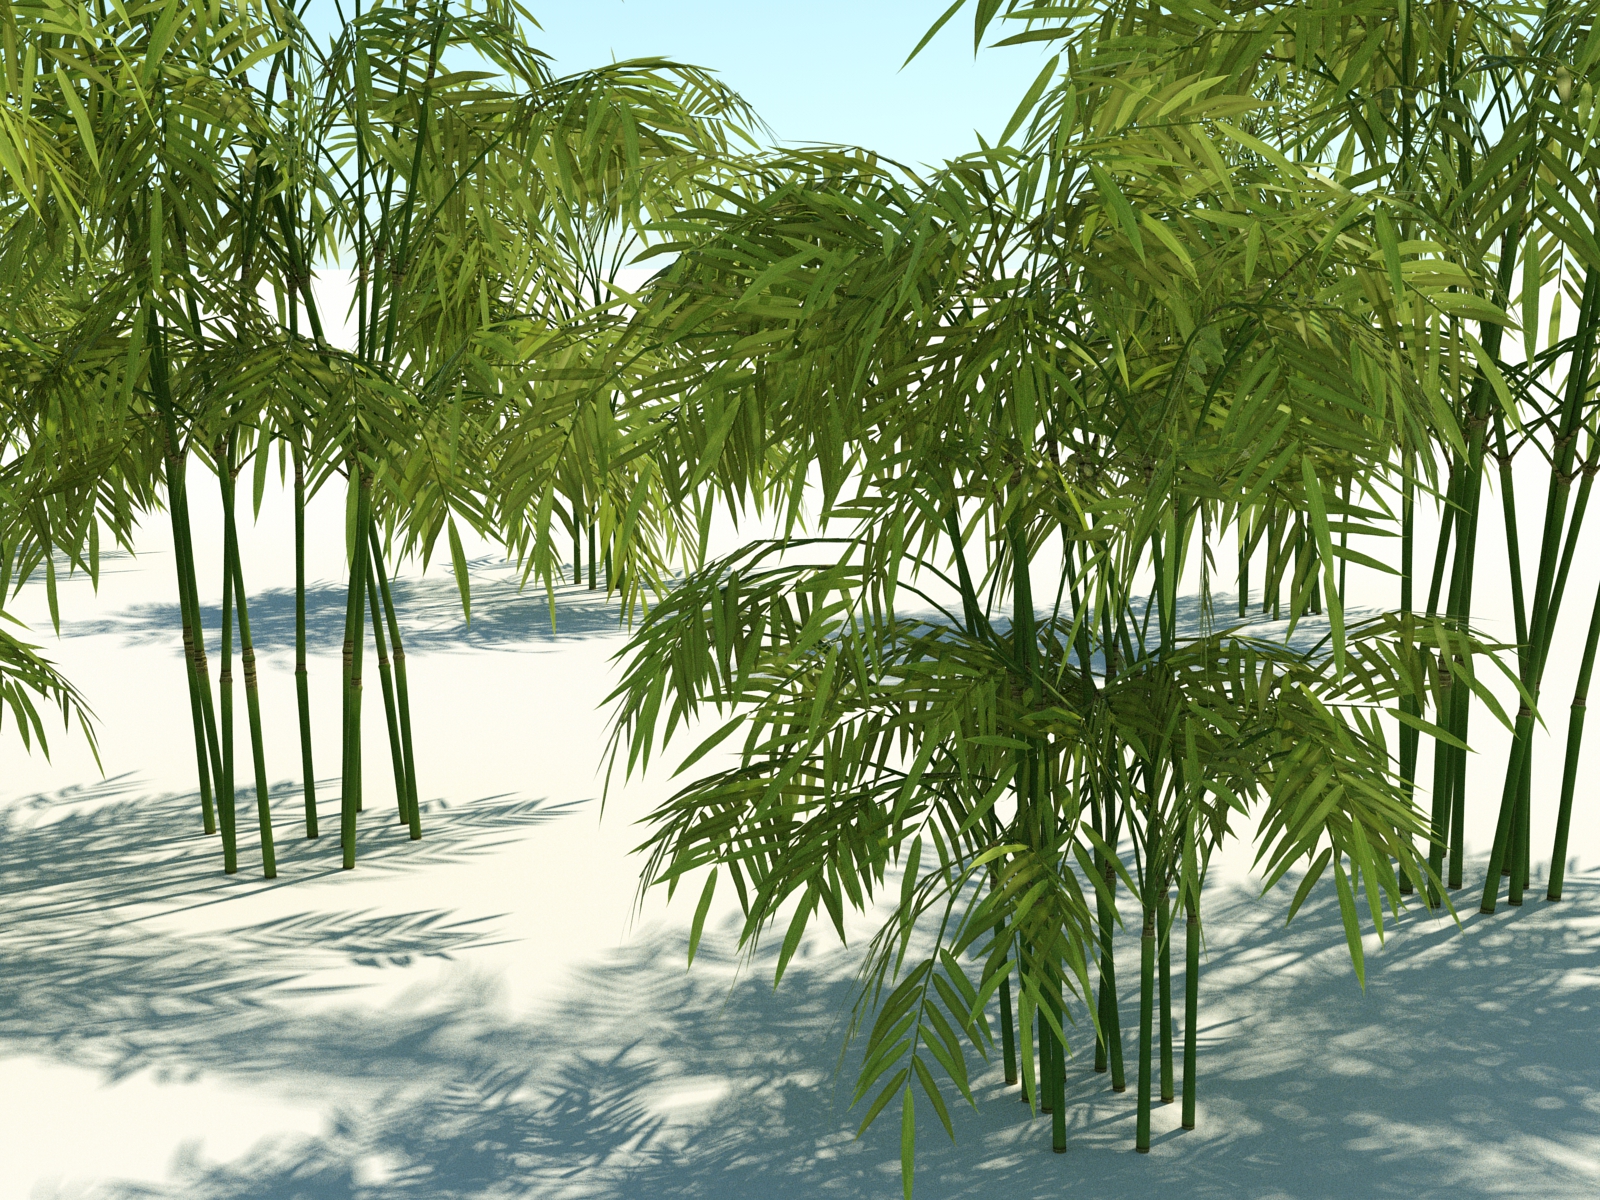 Bamboo2_1600.jpg